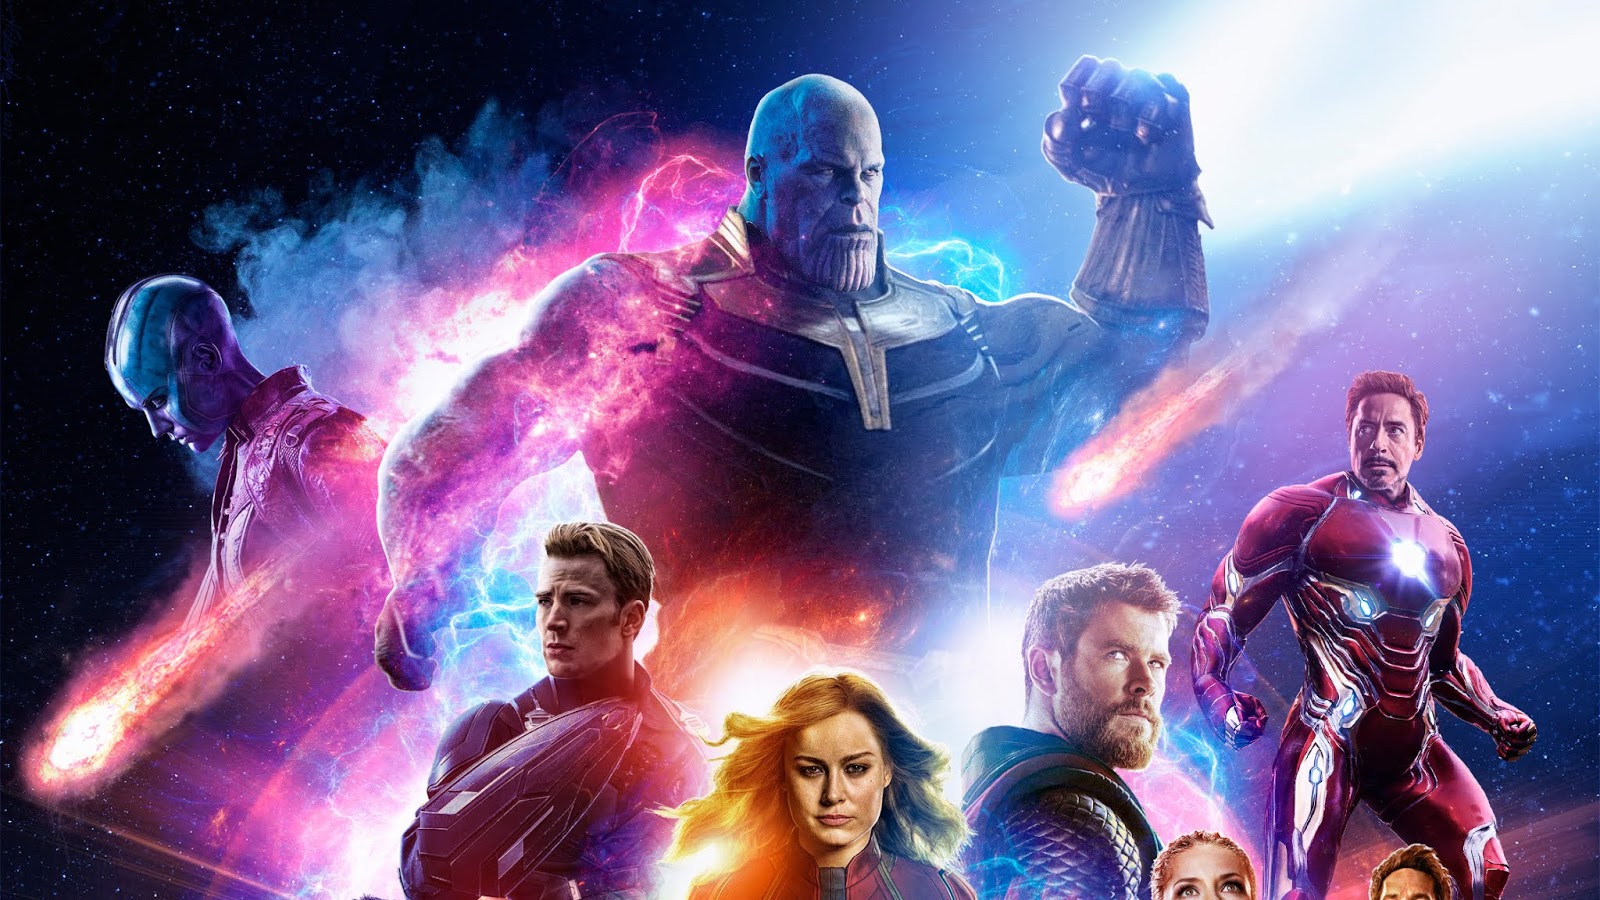 Avengers End Game HD Wallpaper In 4k Captain America Iron Man